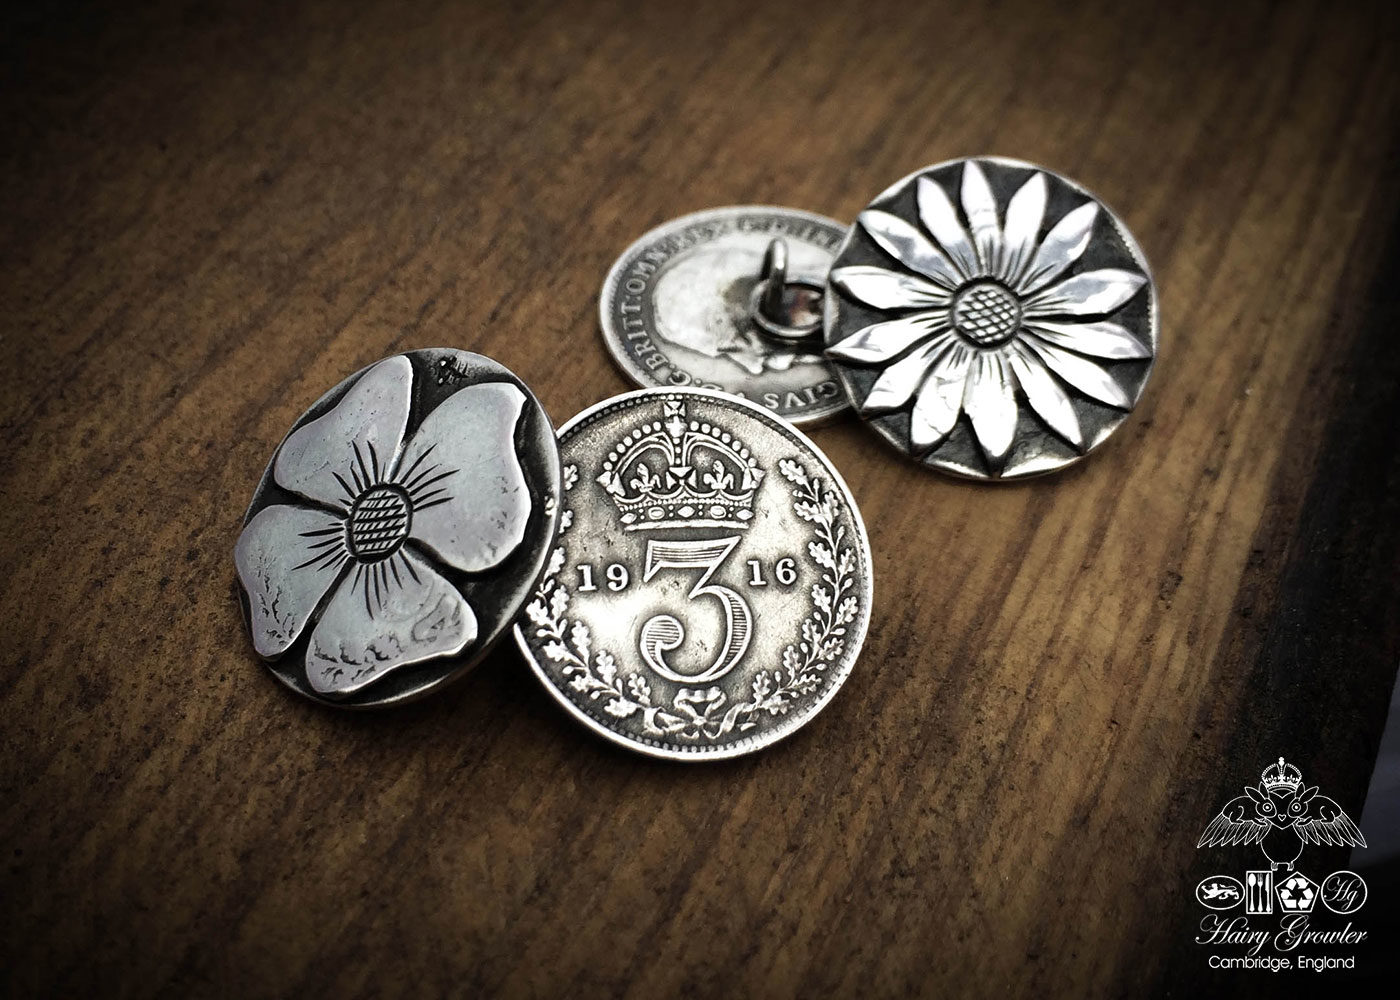 Handmade and repurposed lucky threepence coin flower cufflinks